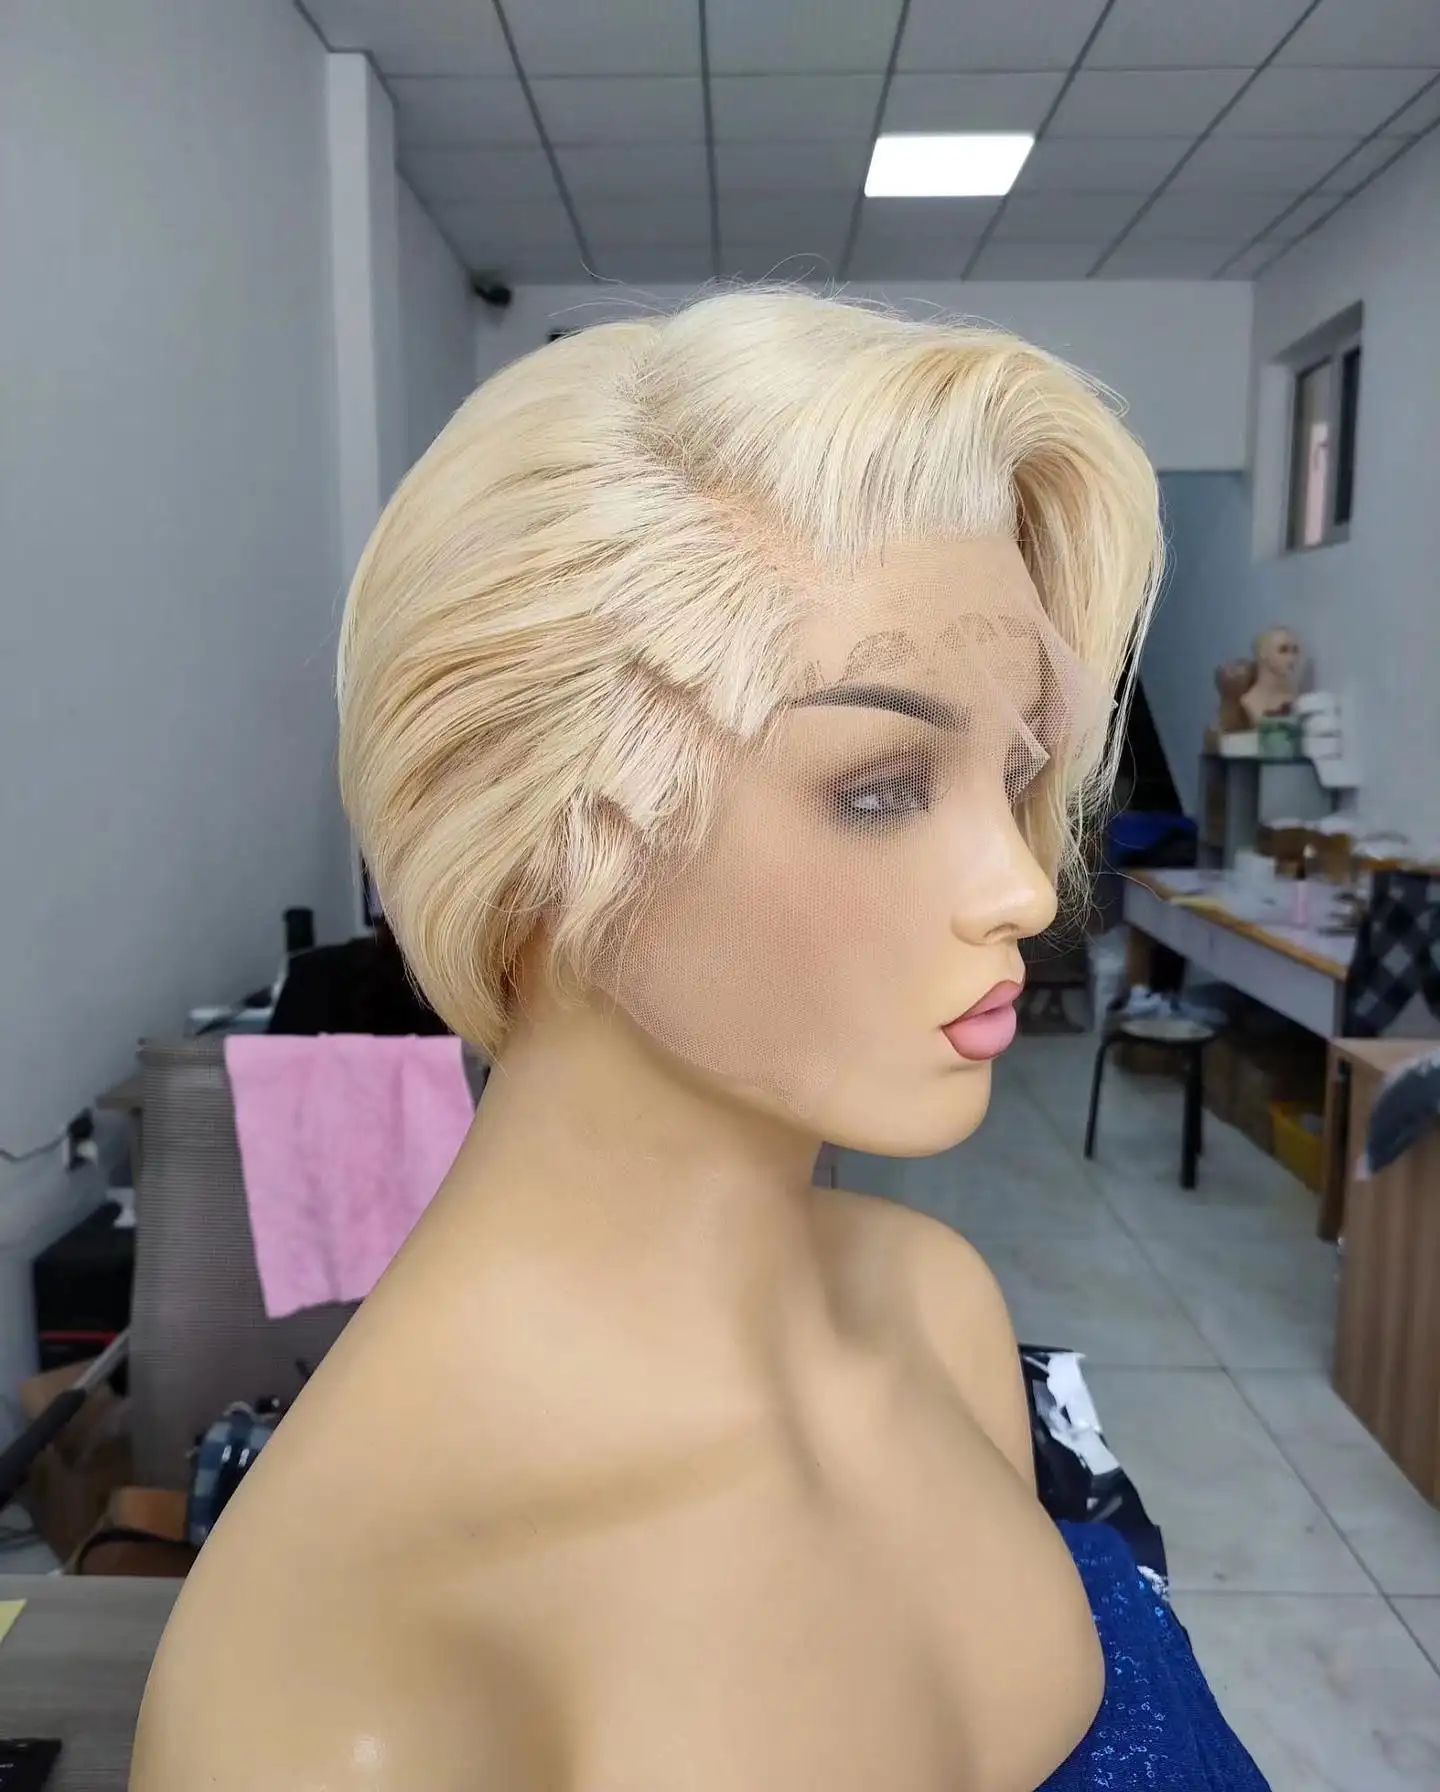 GL Grosir Vendor Rambut Murah 613 Renda Depan Penuh Renda Rambut Manusia Bob Wig dengan Rambut Bayi Warna Pirang Pixie Cut Wig untuk Wanita